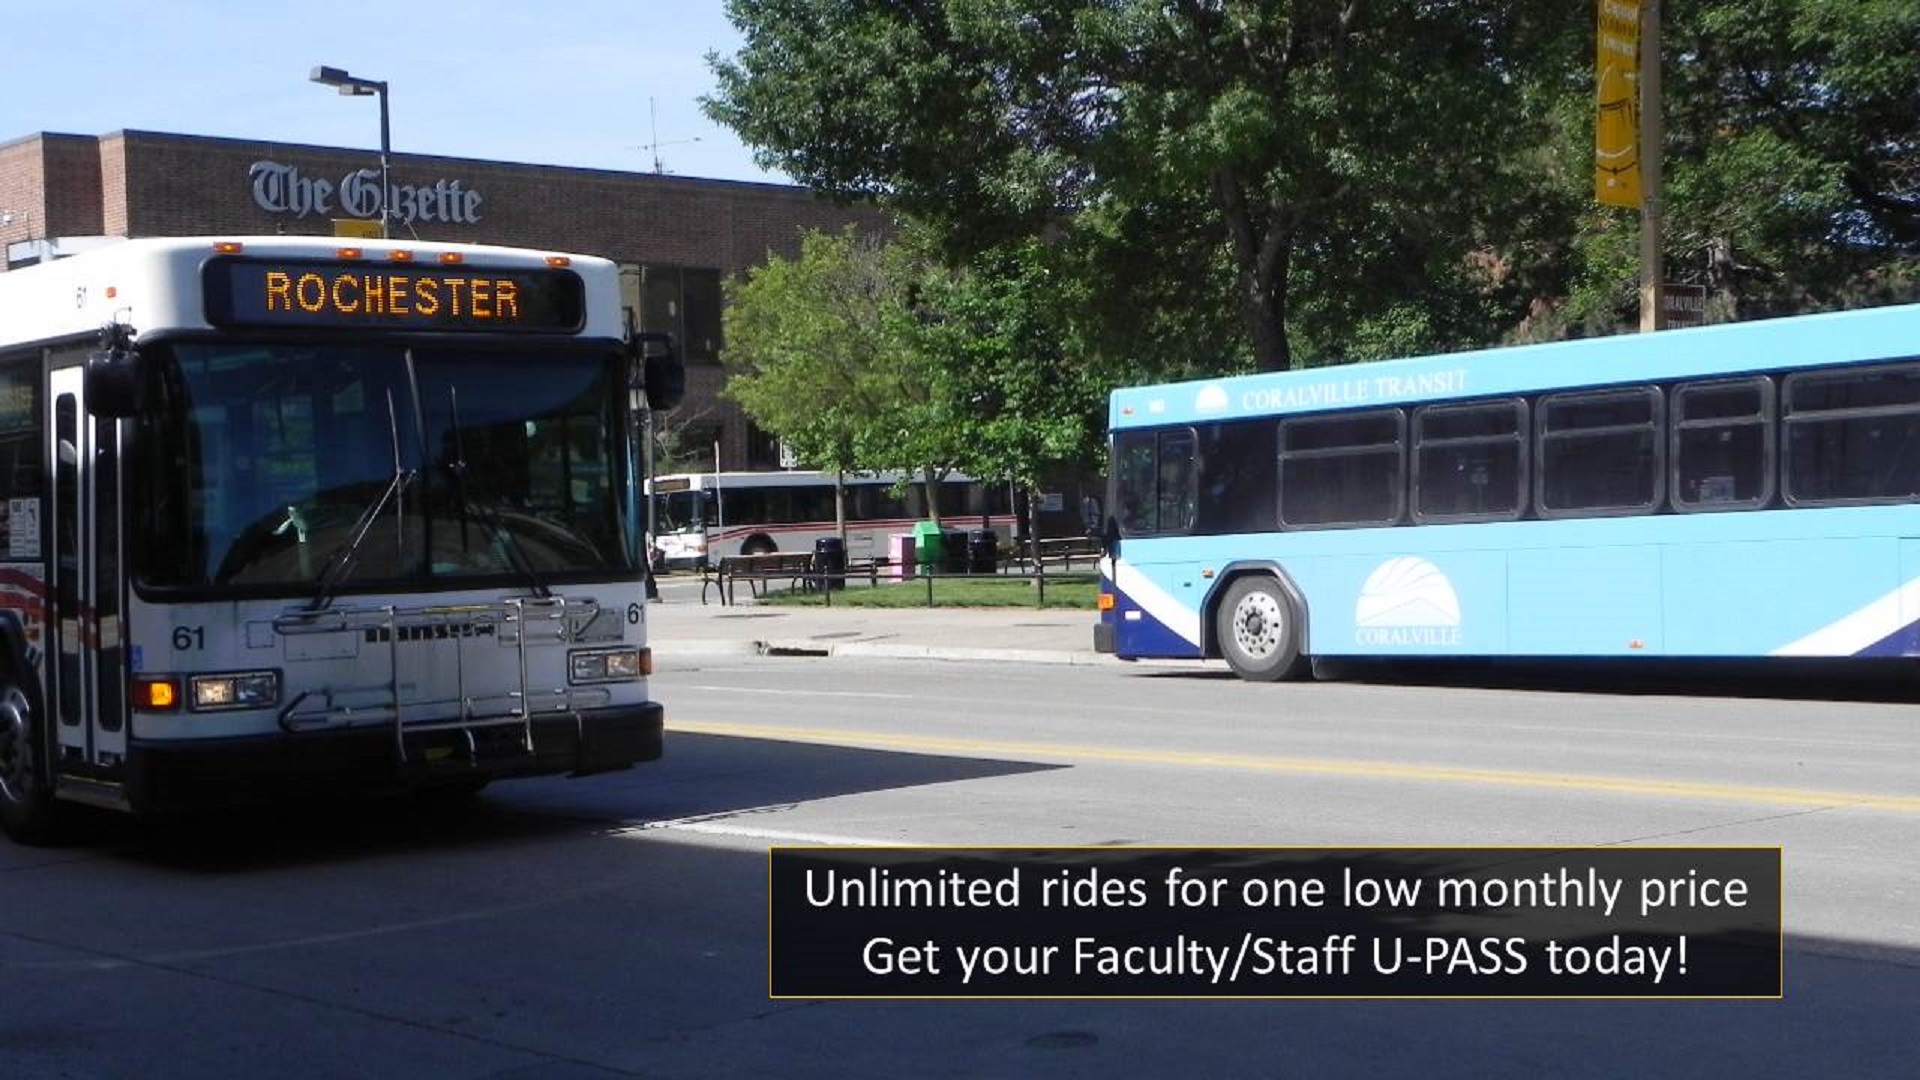 Employee U-passes provide unlimited rides